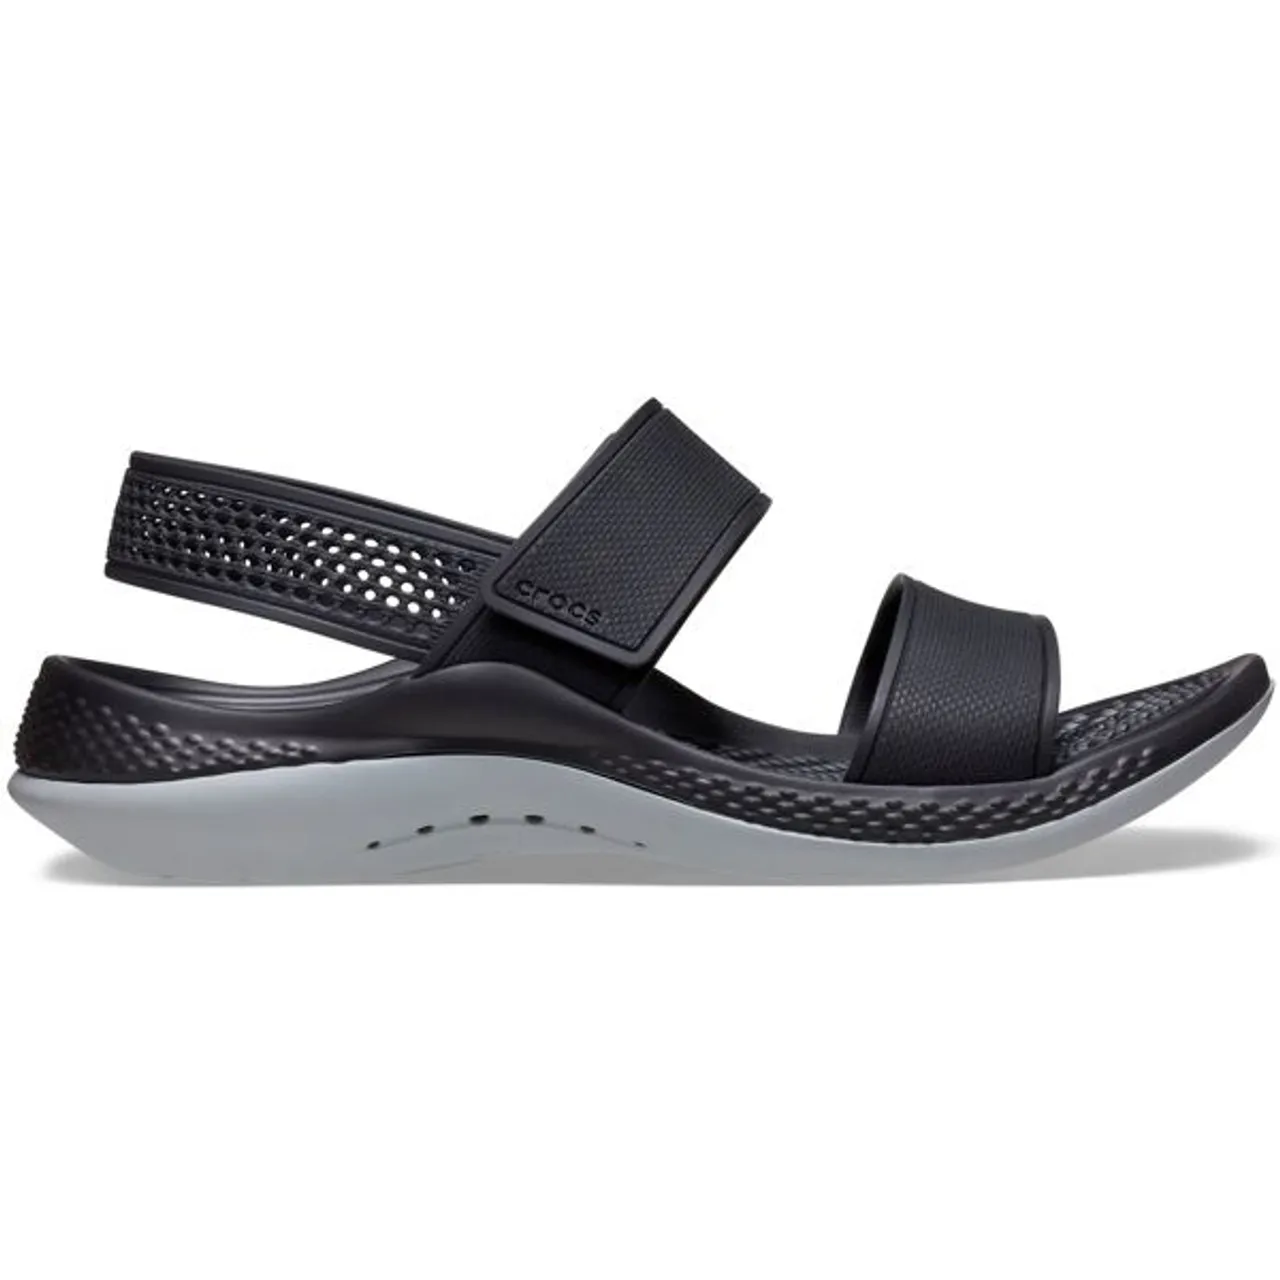 Sandale CROCS "LiteRide 360 Sandal" Gr. 36, schwarz (schwarz, grau) Damen Schuhe Sandalen